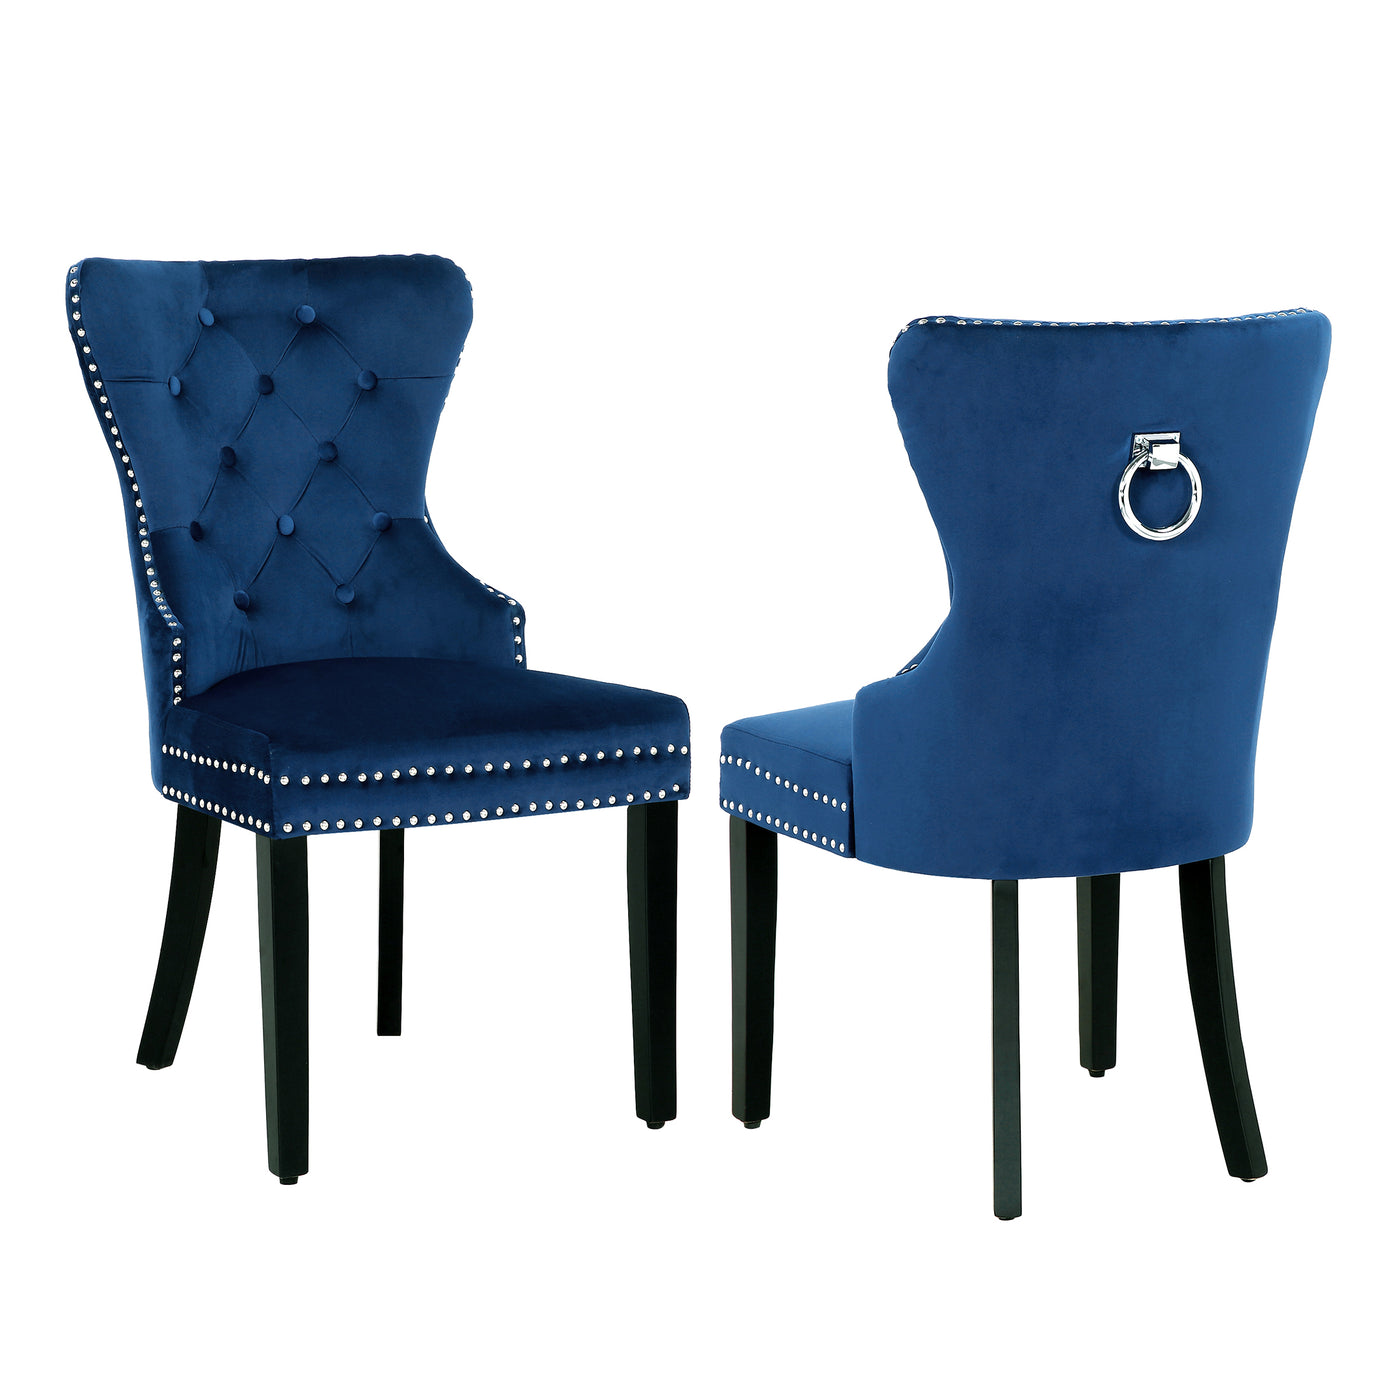 Wordford Velvet Upholstered Tufted Dining Chairs (Set of 2)